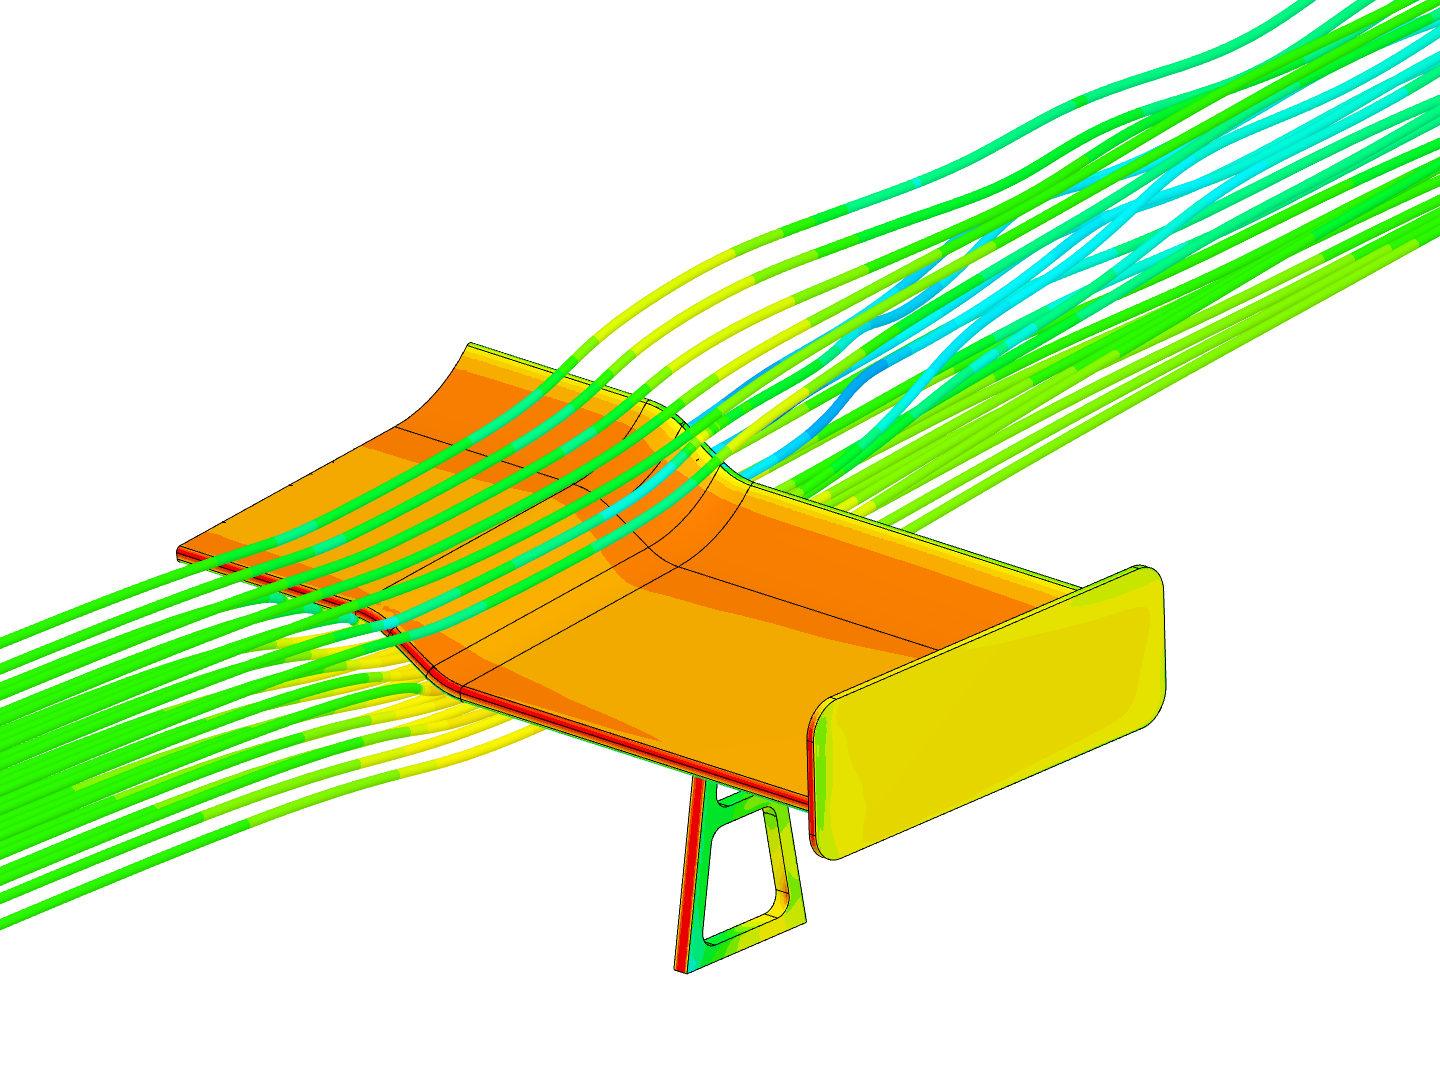 Air flow image